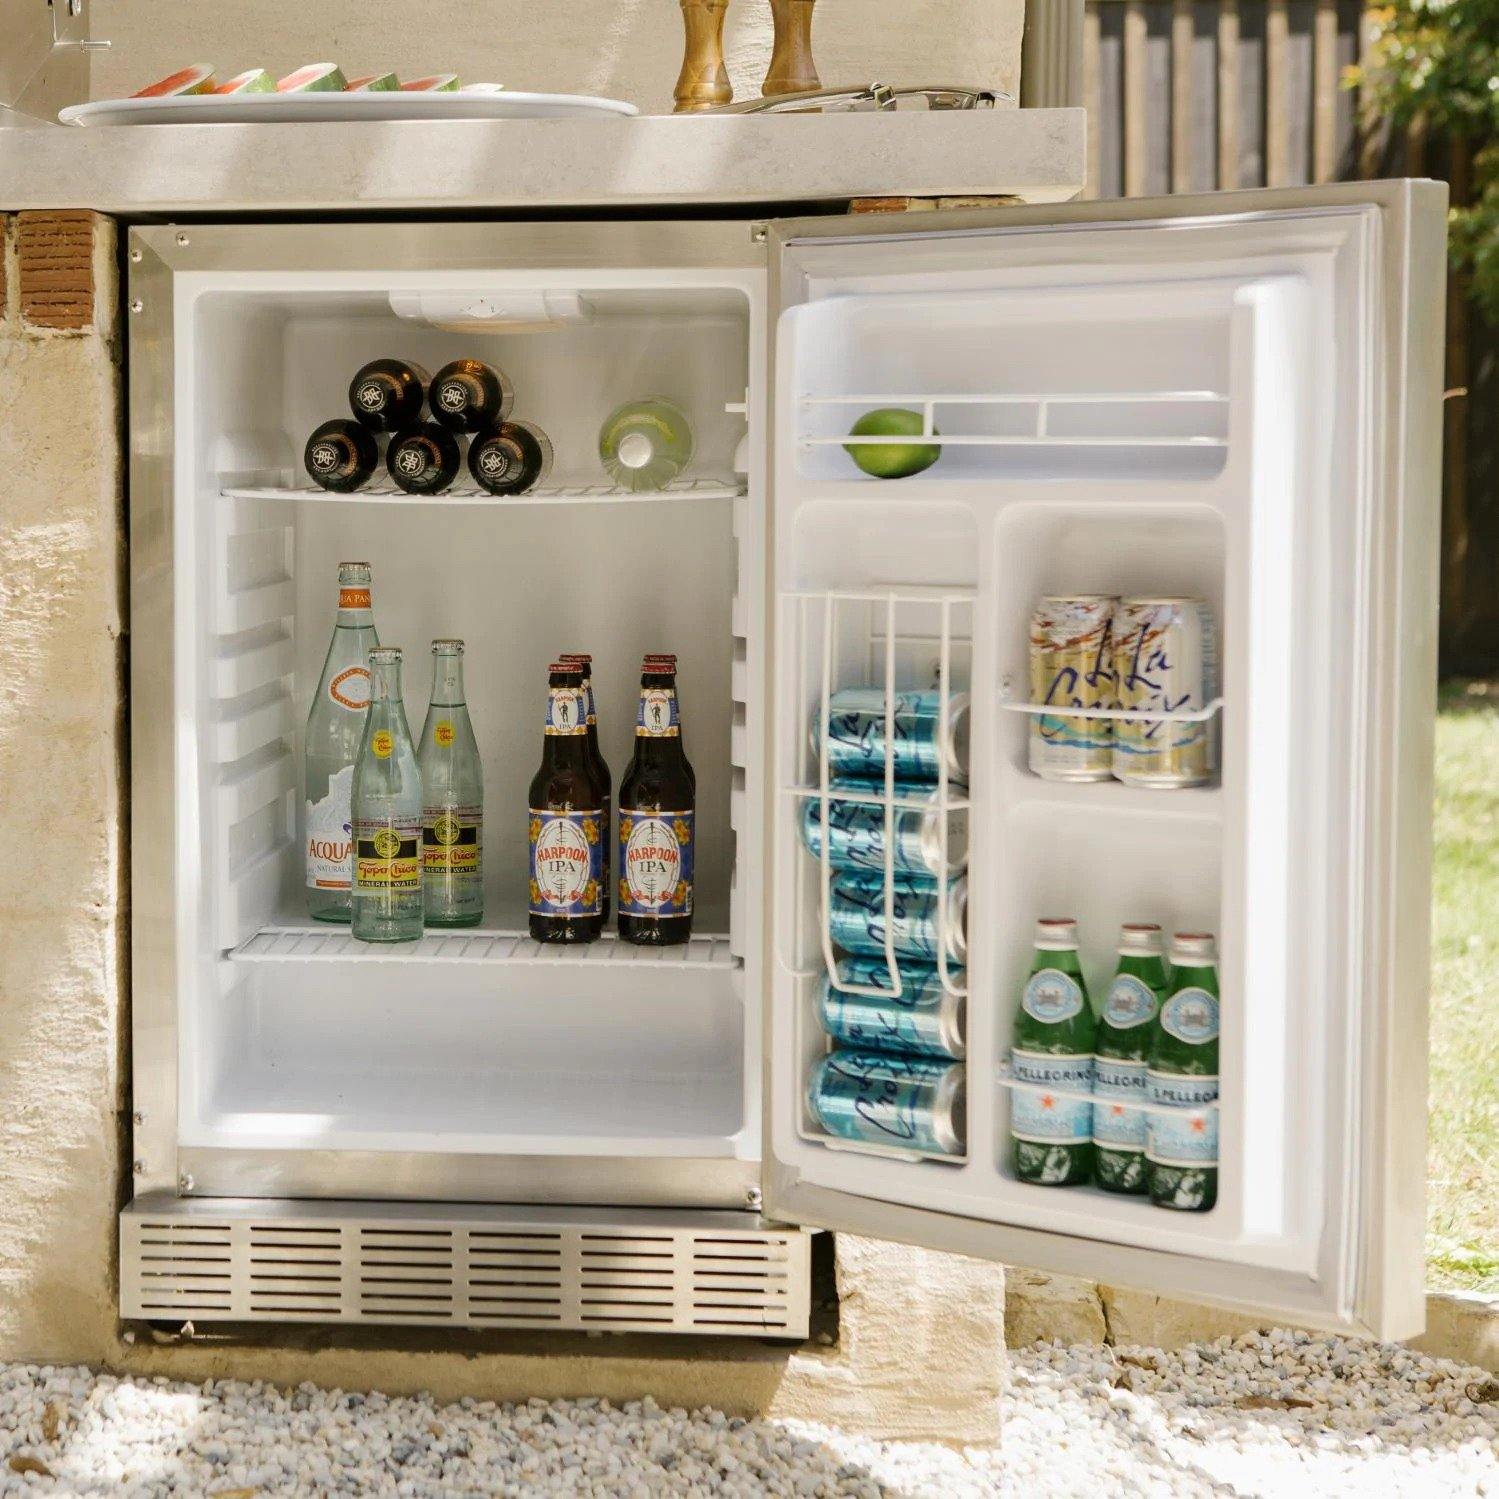 Summit -24 Wide 2-Drawer All-Refrigerator, ADA Compliant | ADRD24